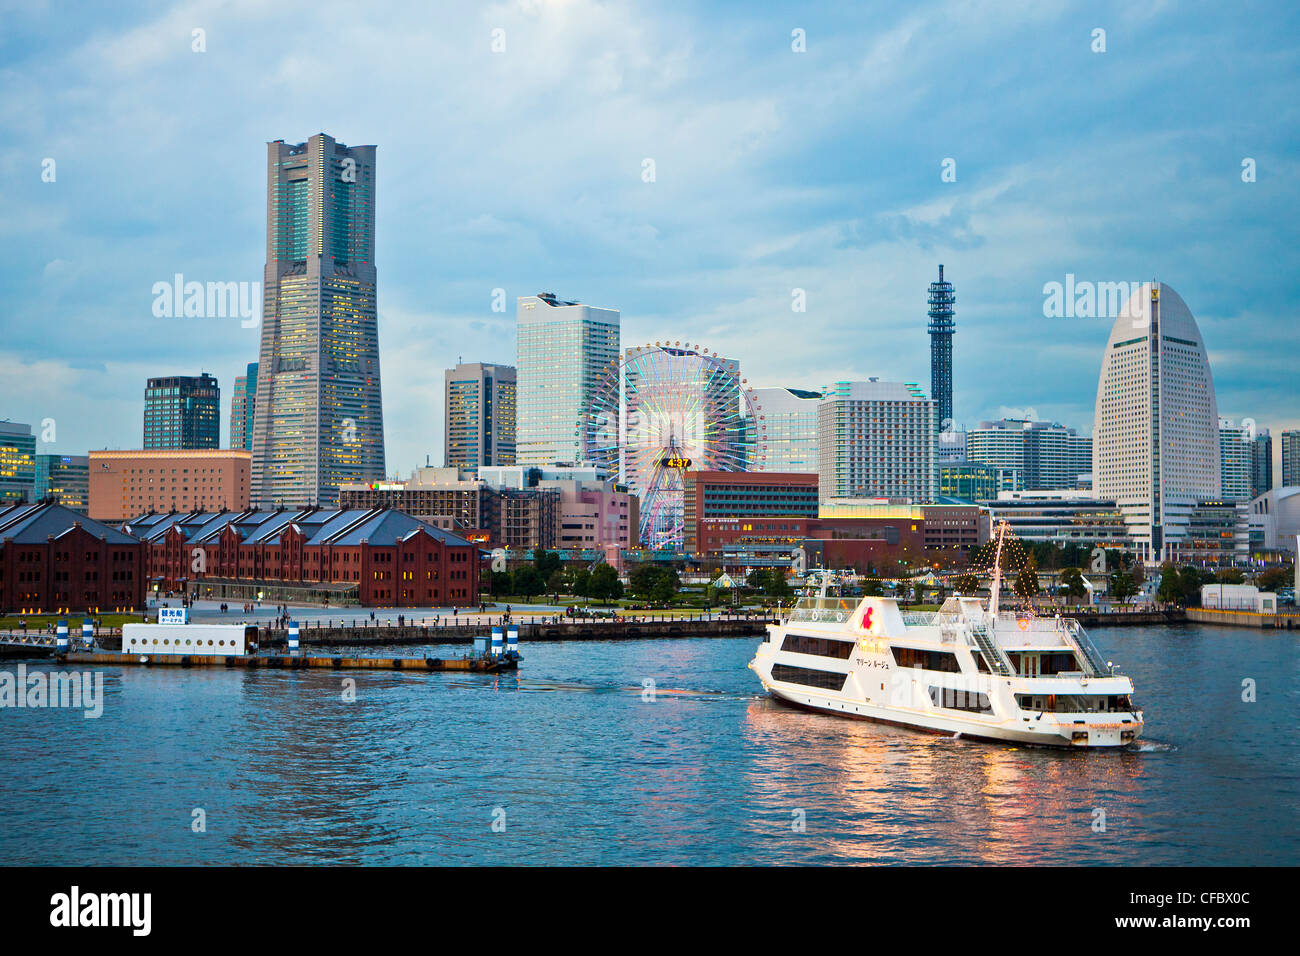 Japan, Asia, Yokohama, City, Skyline, Landmark, building, Ferries, Wheel, architecture, boat, lights, skyline, Stock Photo